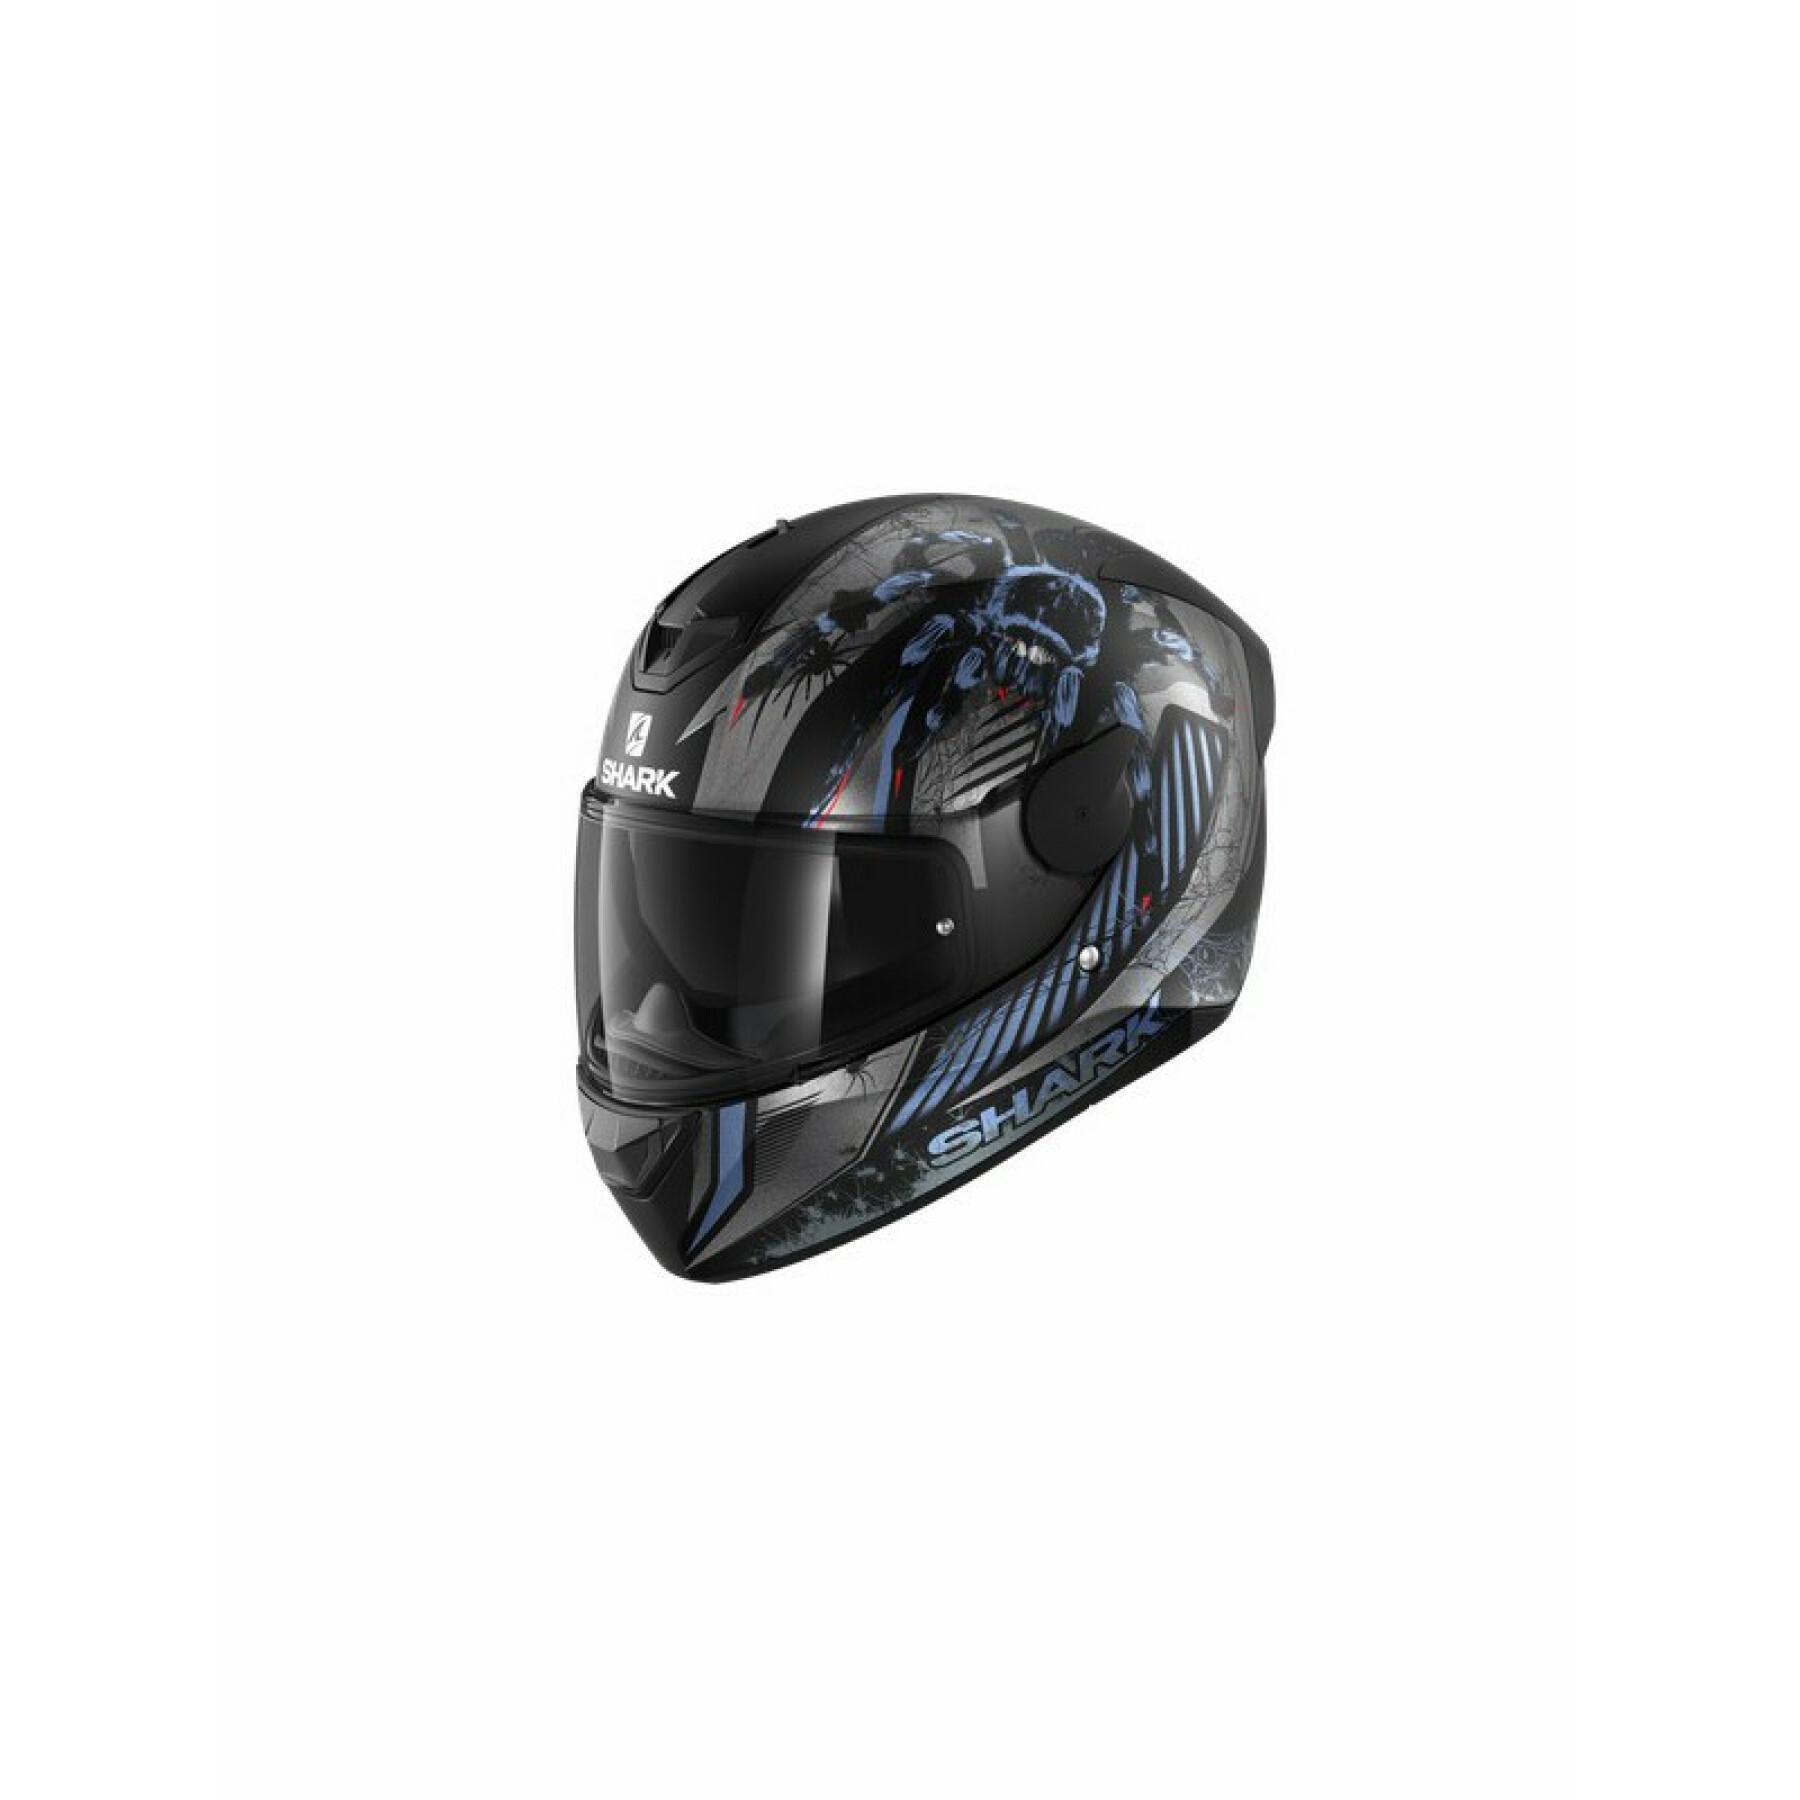 Shark Varial Blank Motocross Helmet